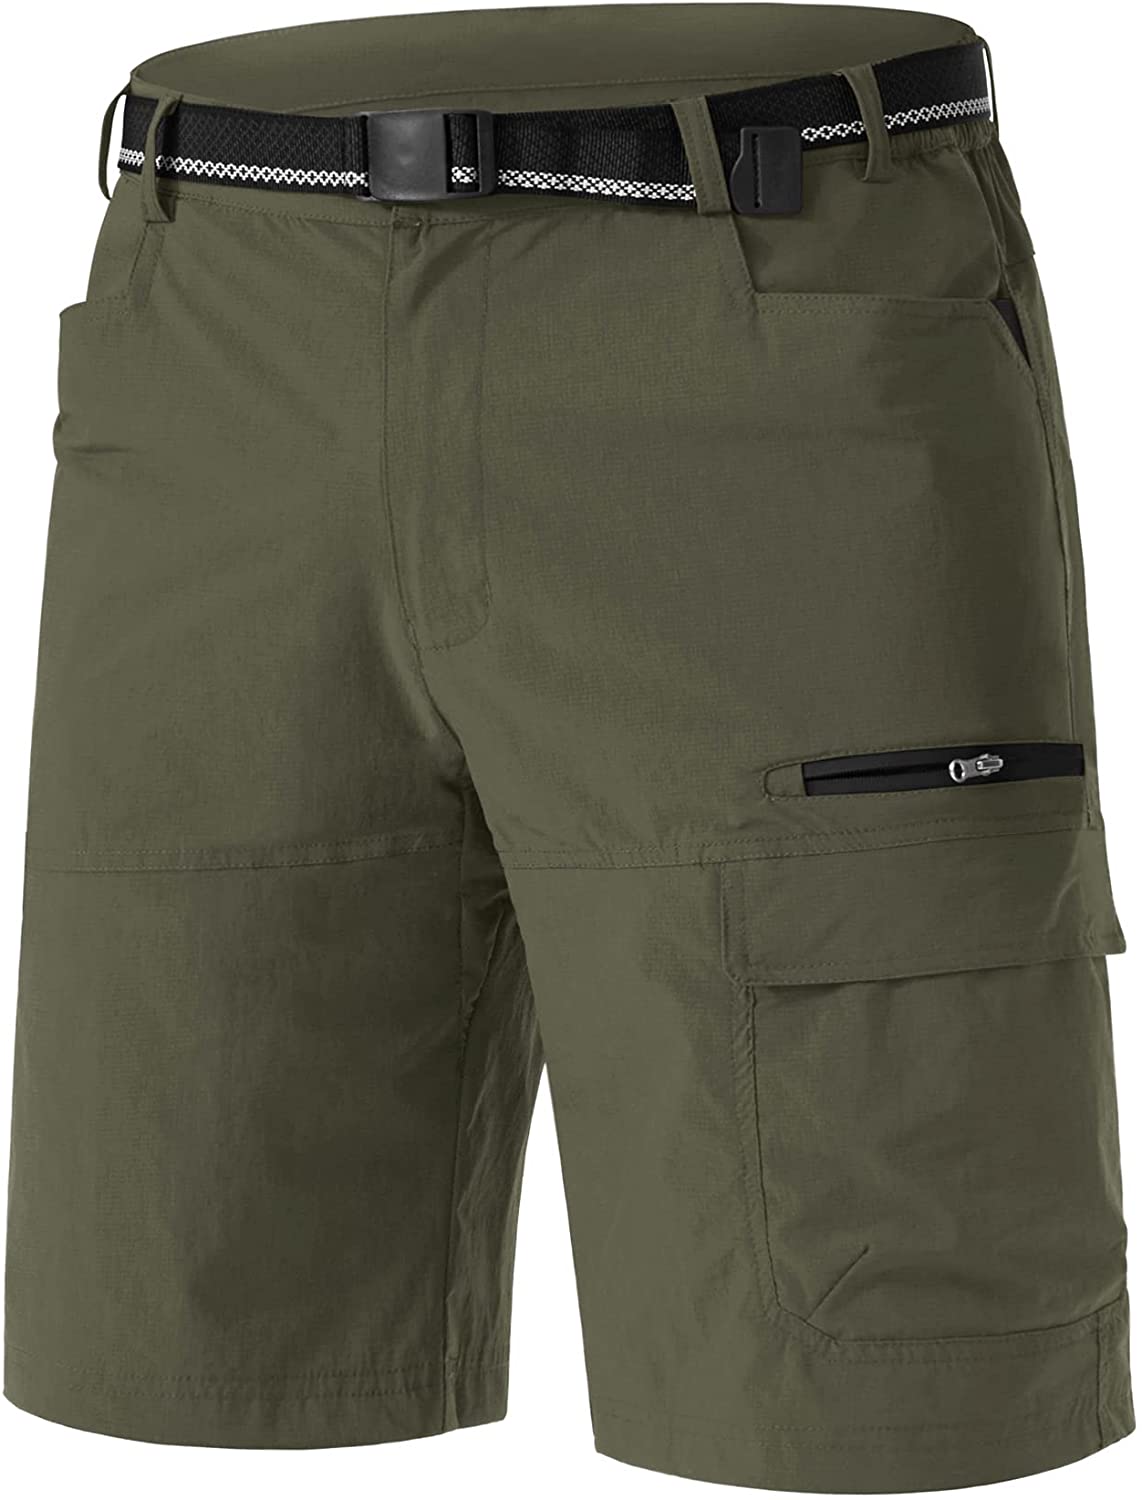 TACVASEN Men's Summer Outdoor Shorts Quick Dry Cargo Casual Hiking Shorts 